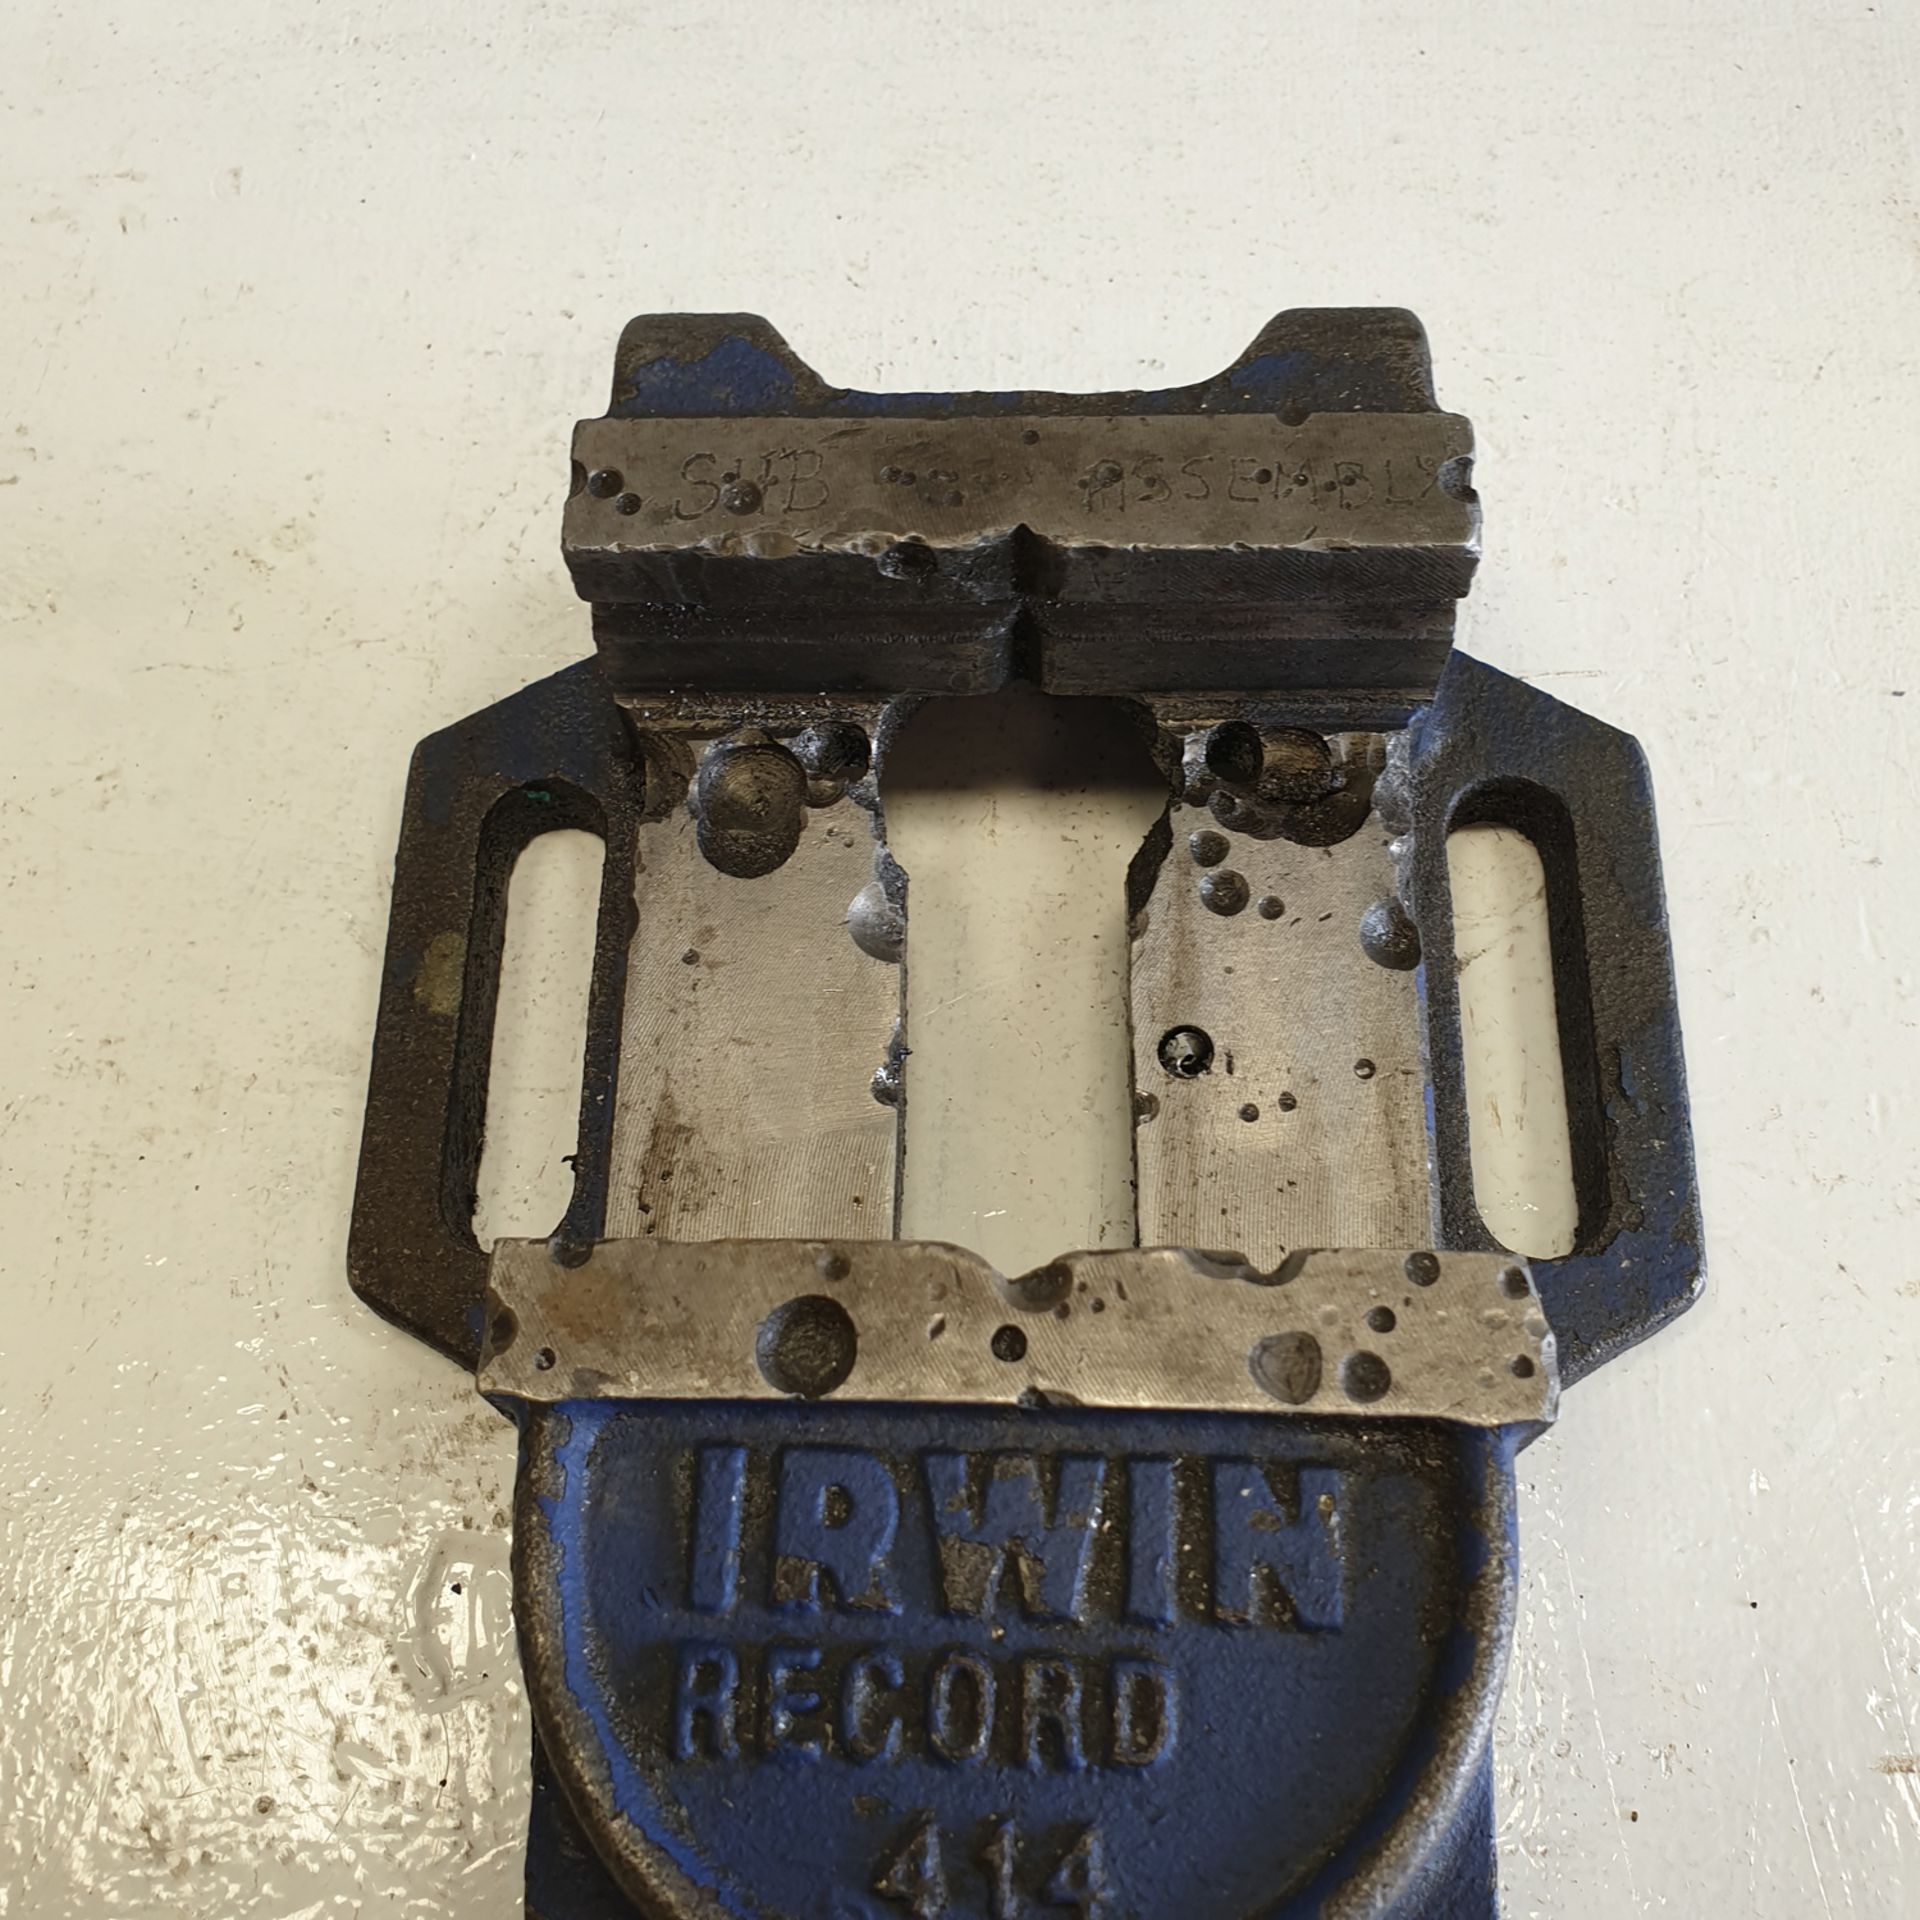 Irwin Record 414 Drill Vice. - Image 2 of 3